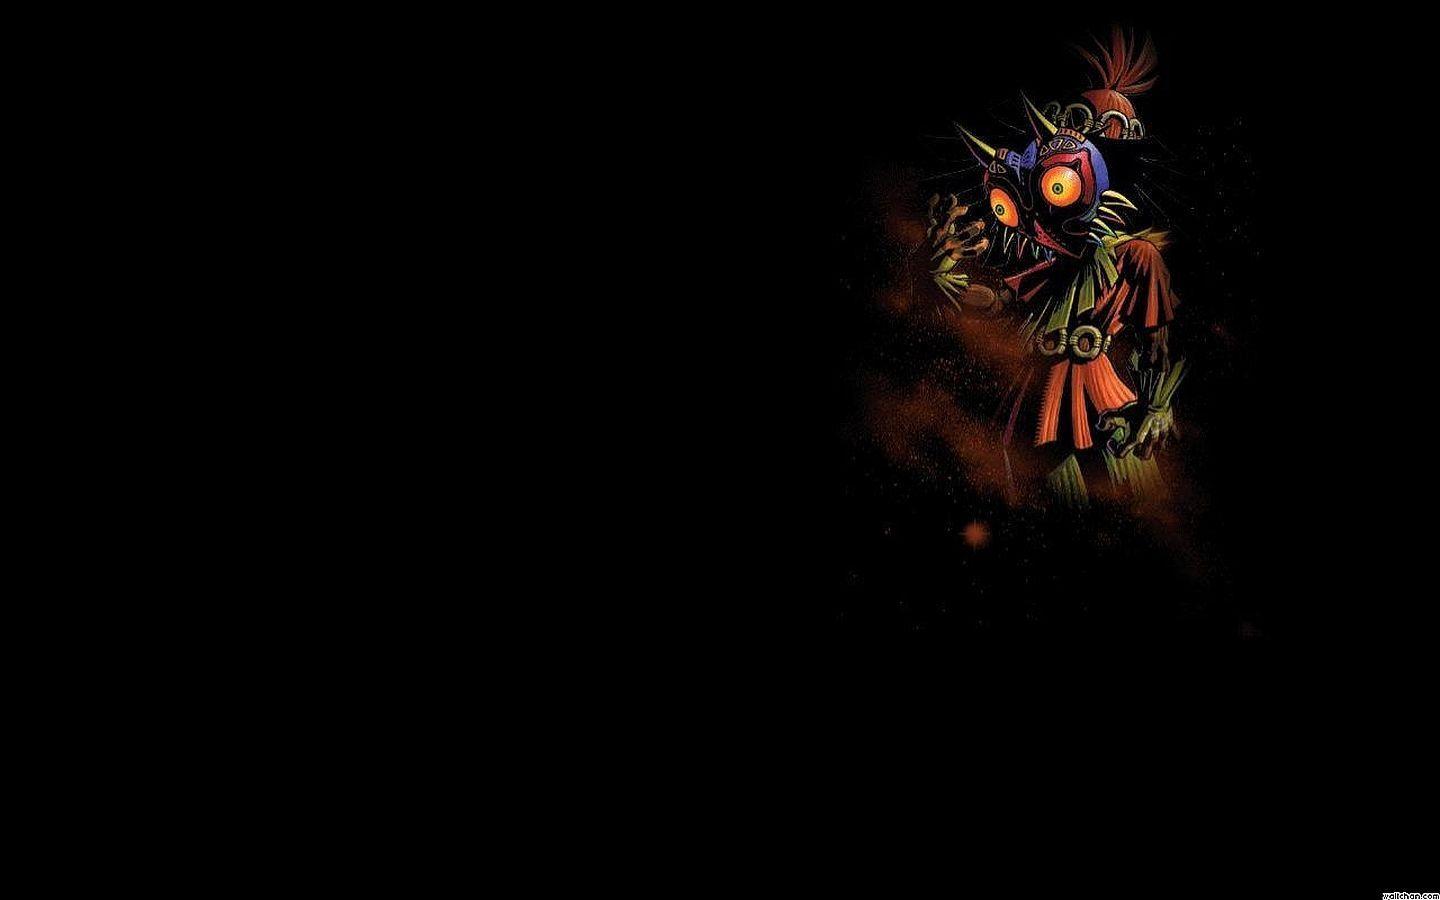 20 The Legend Of Zelda: Majora&Mask Wallpapers